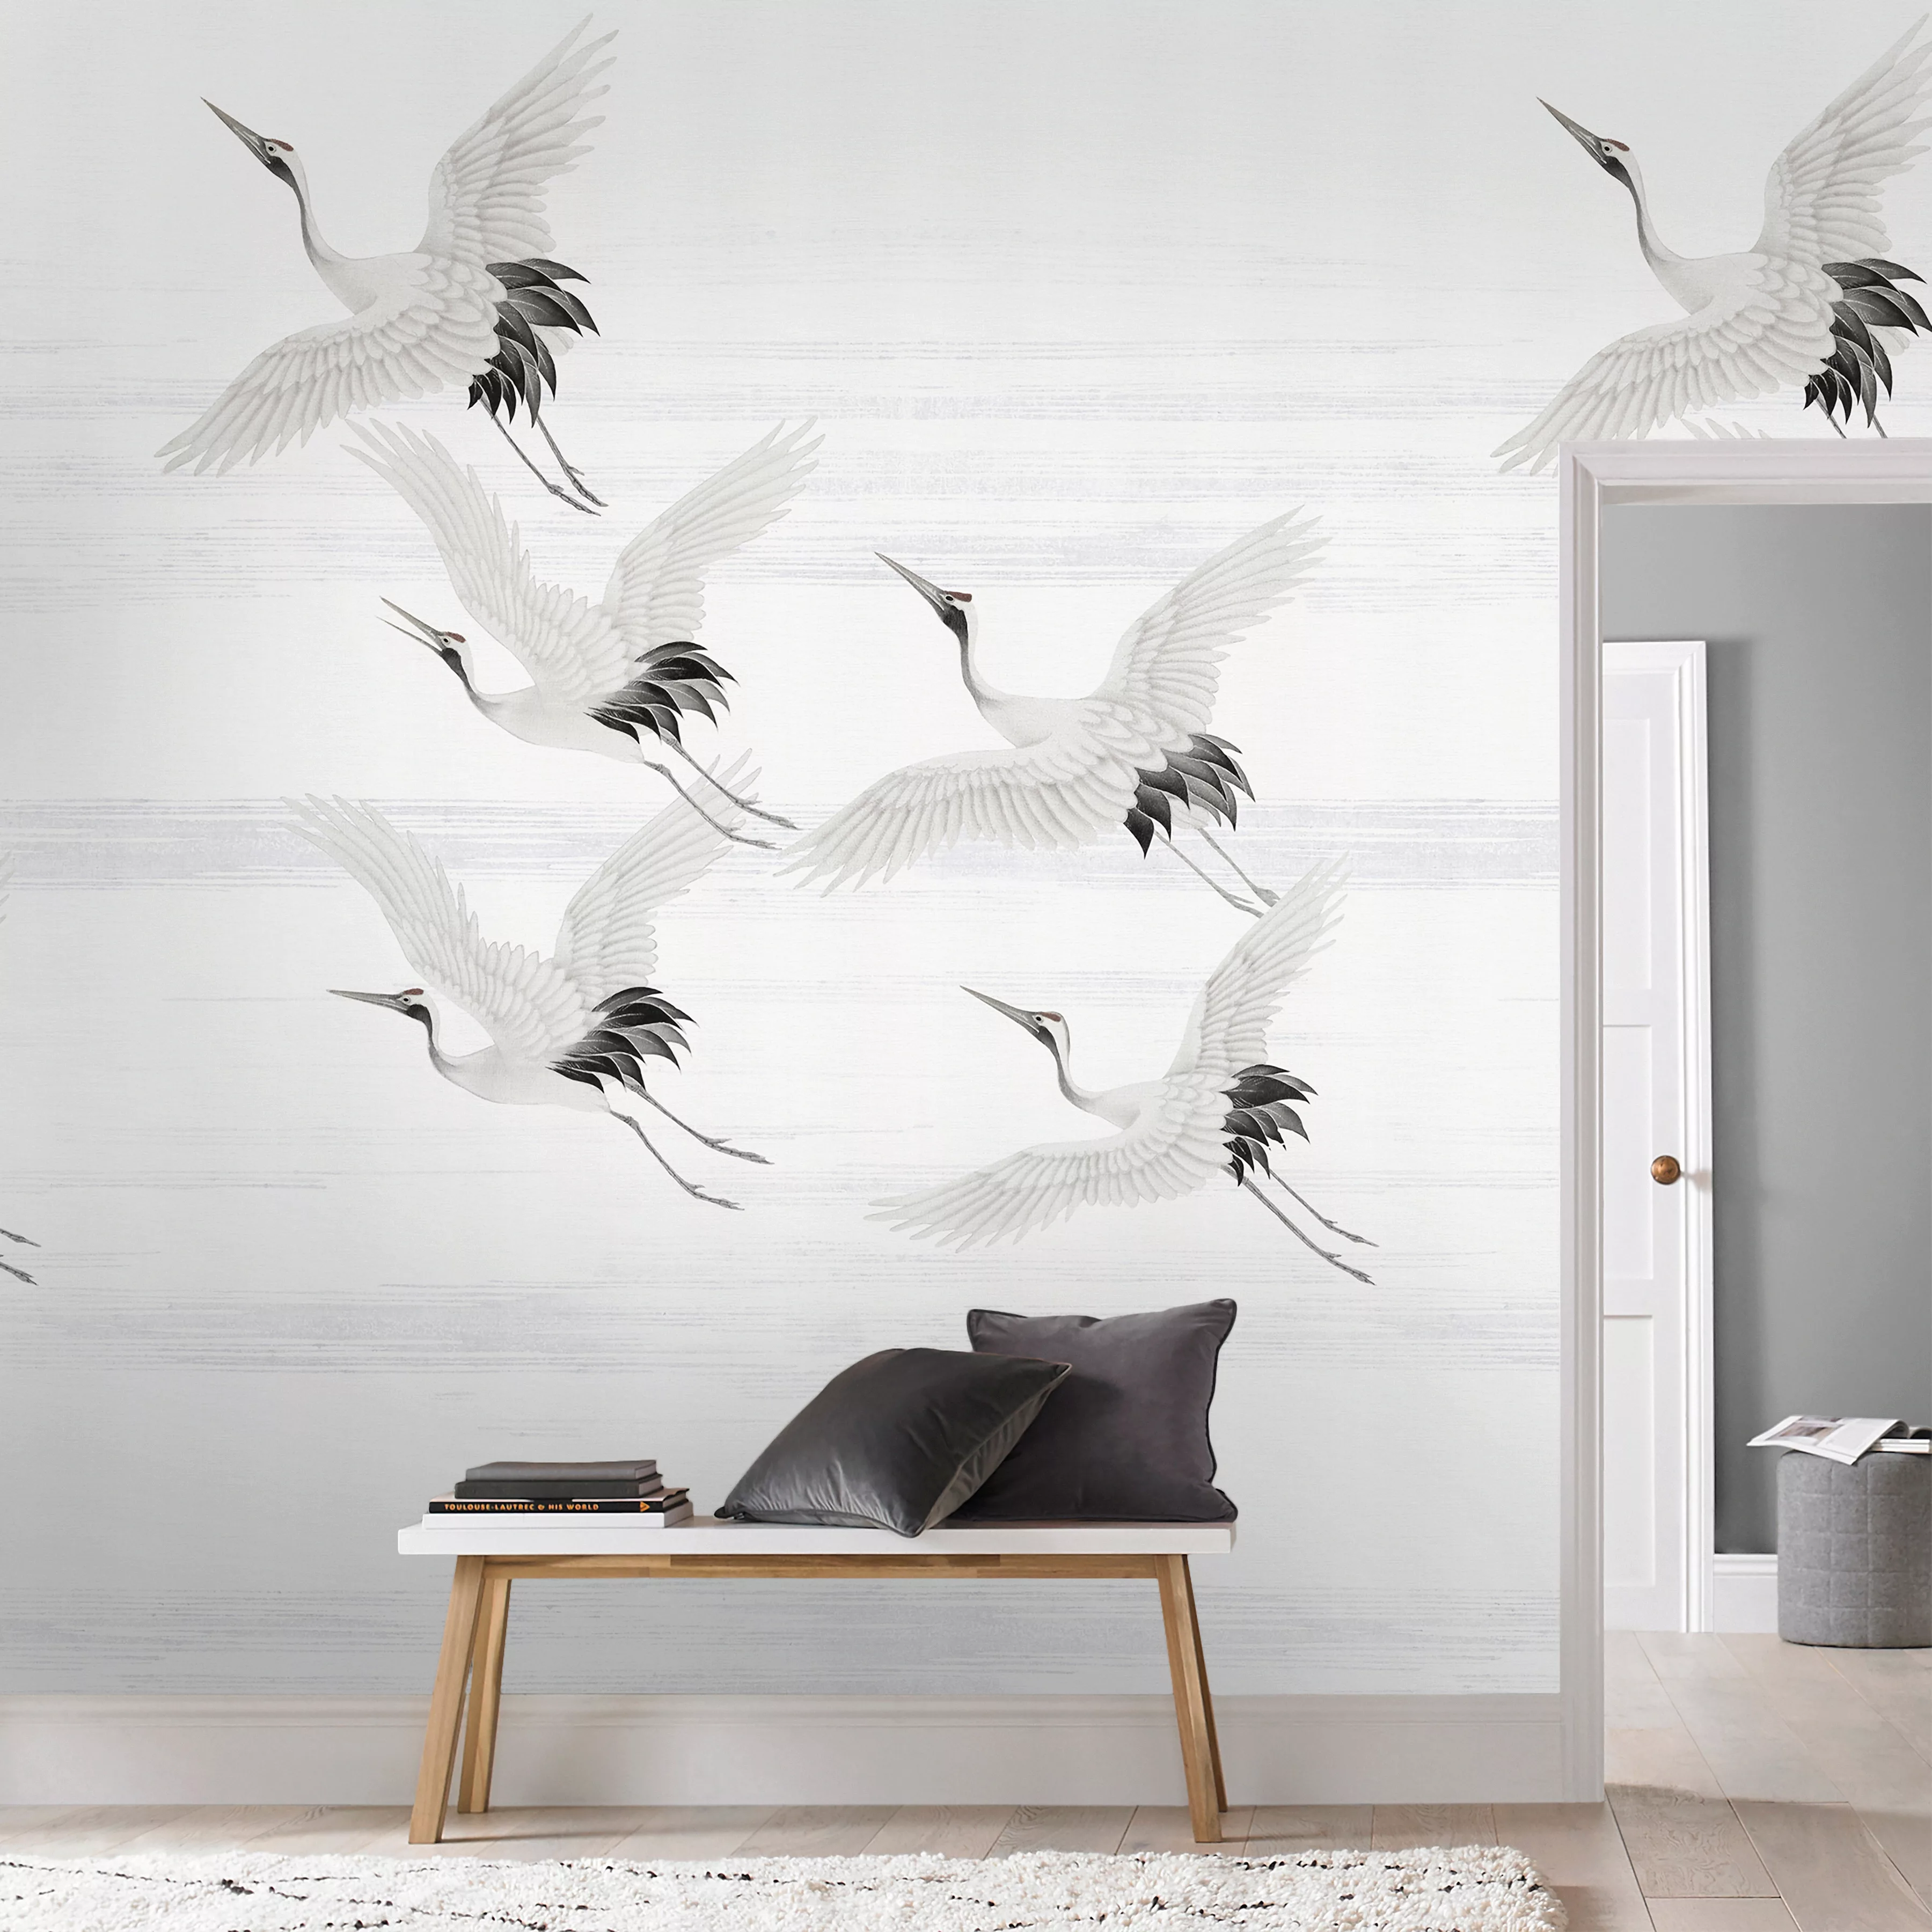 Art for the Home Fototapete Kraanvogels  280 x 200 cm günstig online kaufen